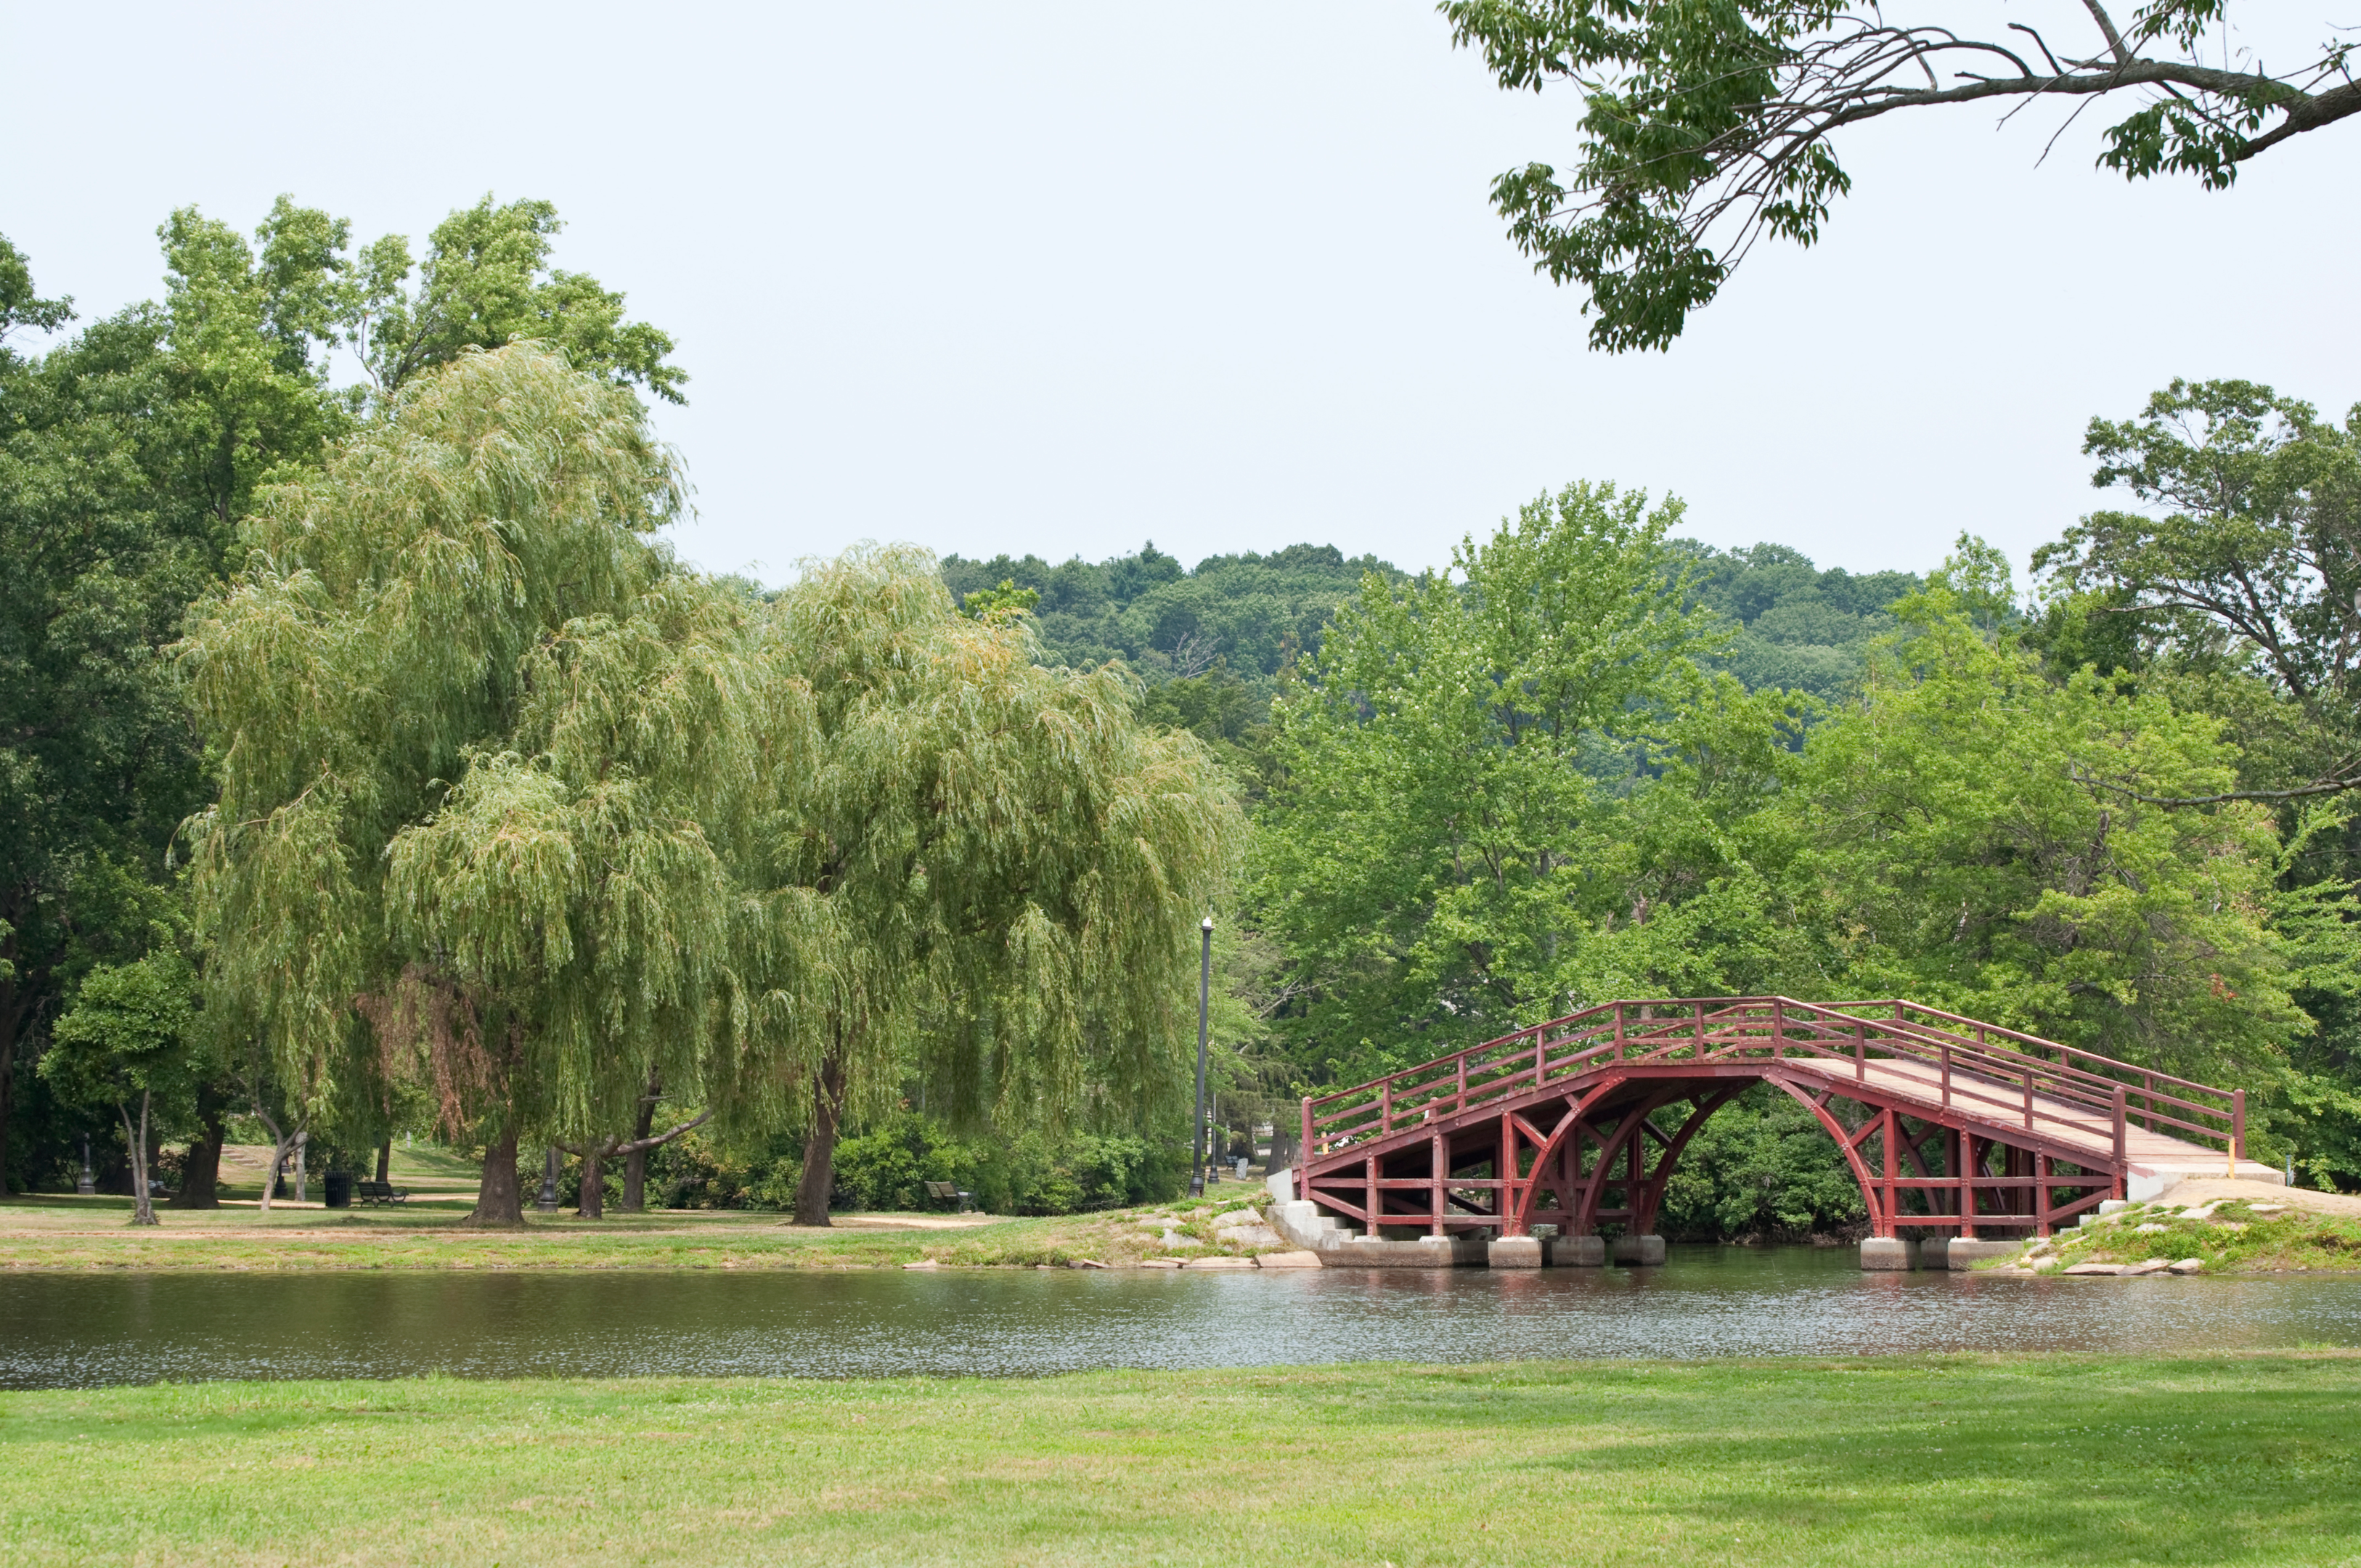 A bridge at Elm Park connecting two paths